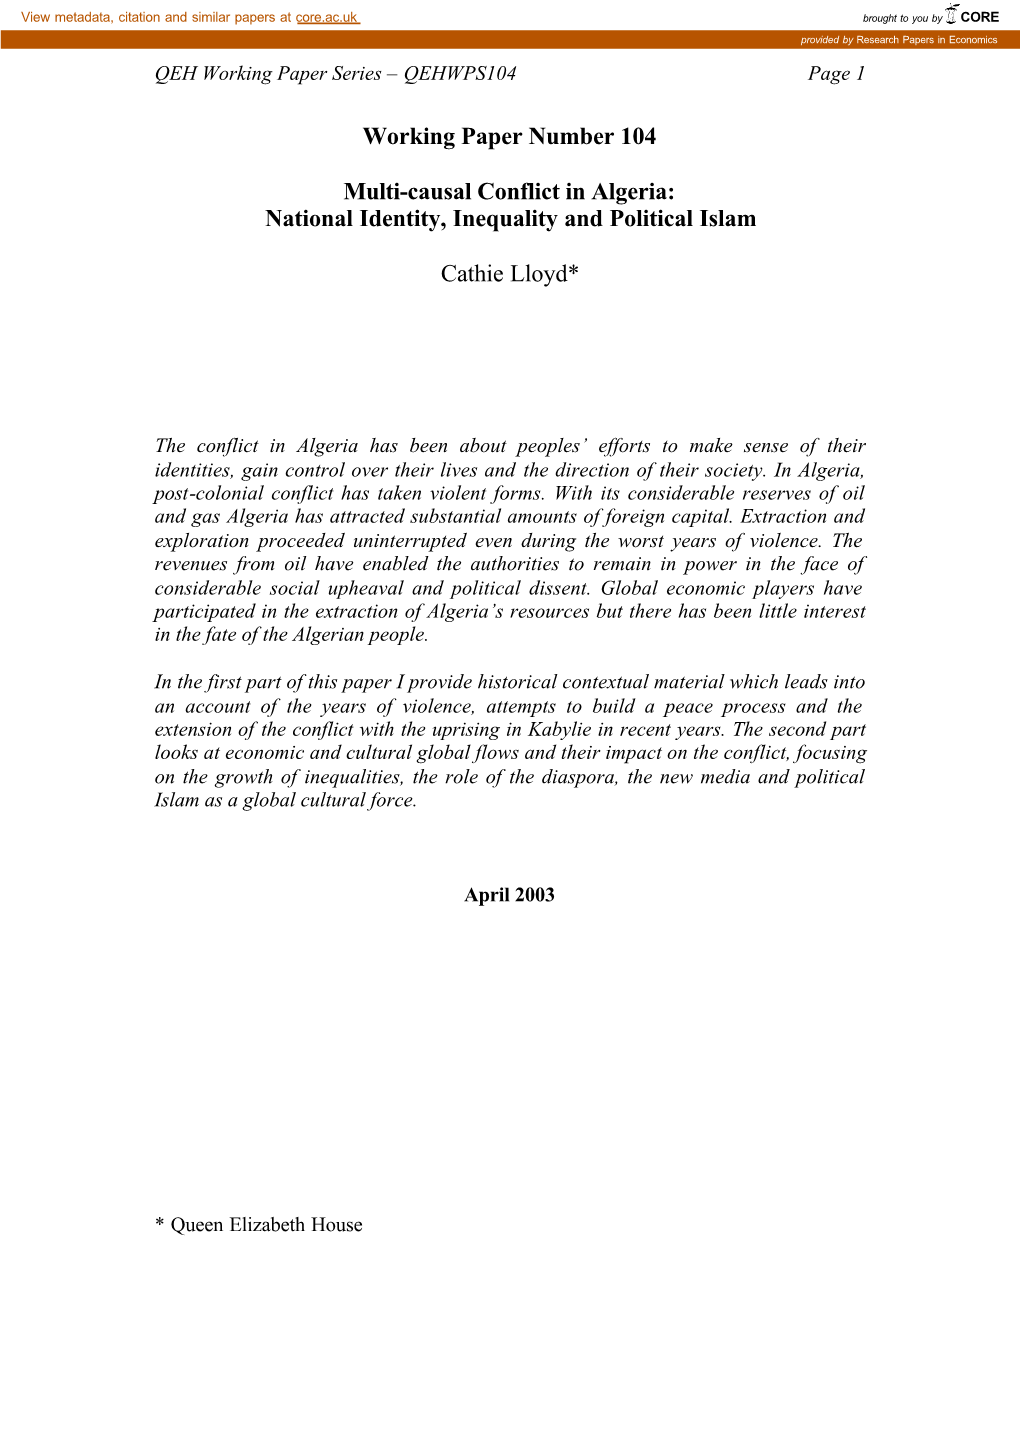 Working Paper Number 104 Multi-Causal Conflict in Algeria